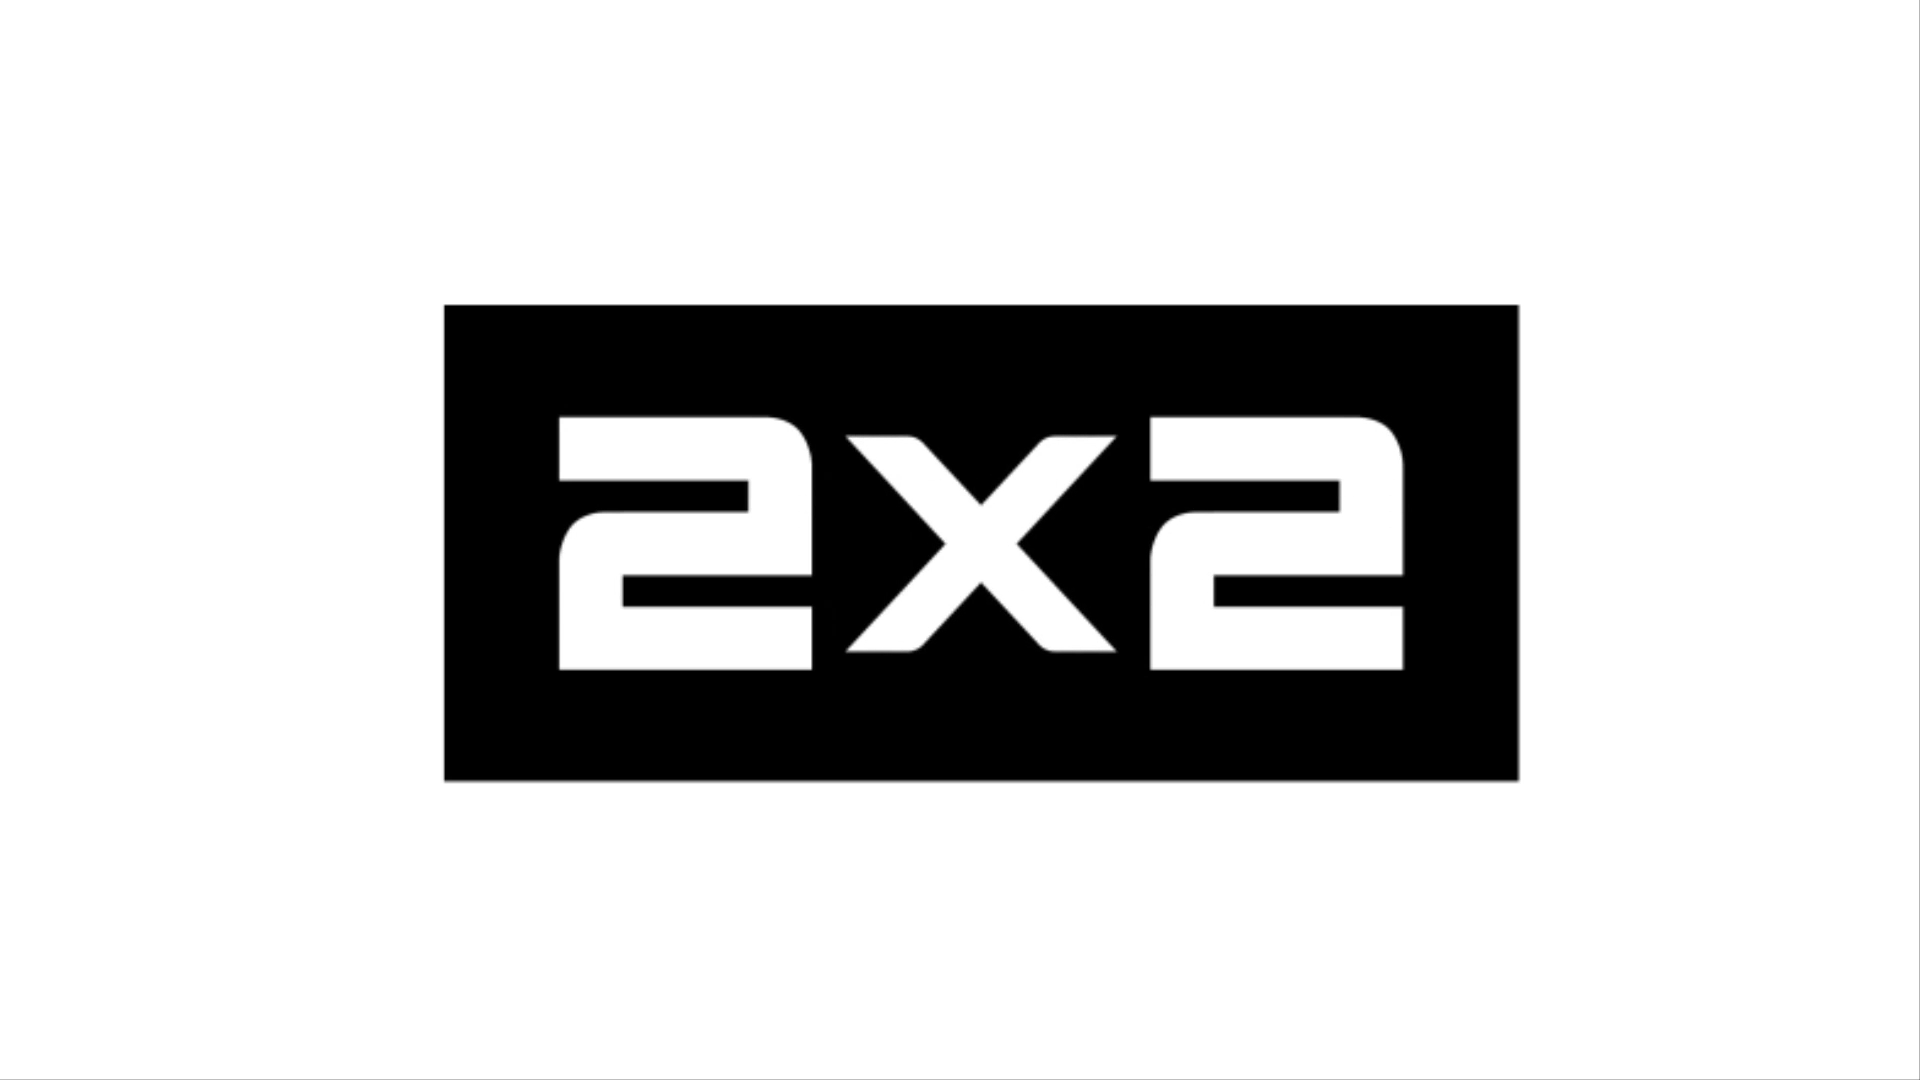 Tiks tv. Телеканал 2х2 логотип. Телеканал 2х2 (the 2x2 channel). Эмблема канала 2х2. Дважды два логотип.